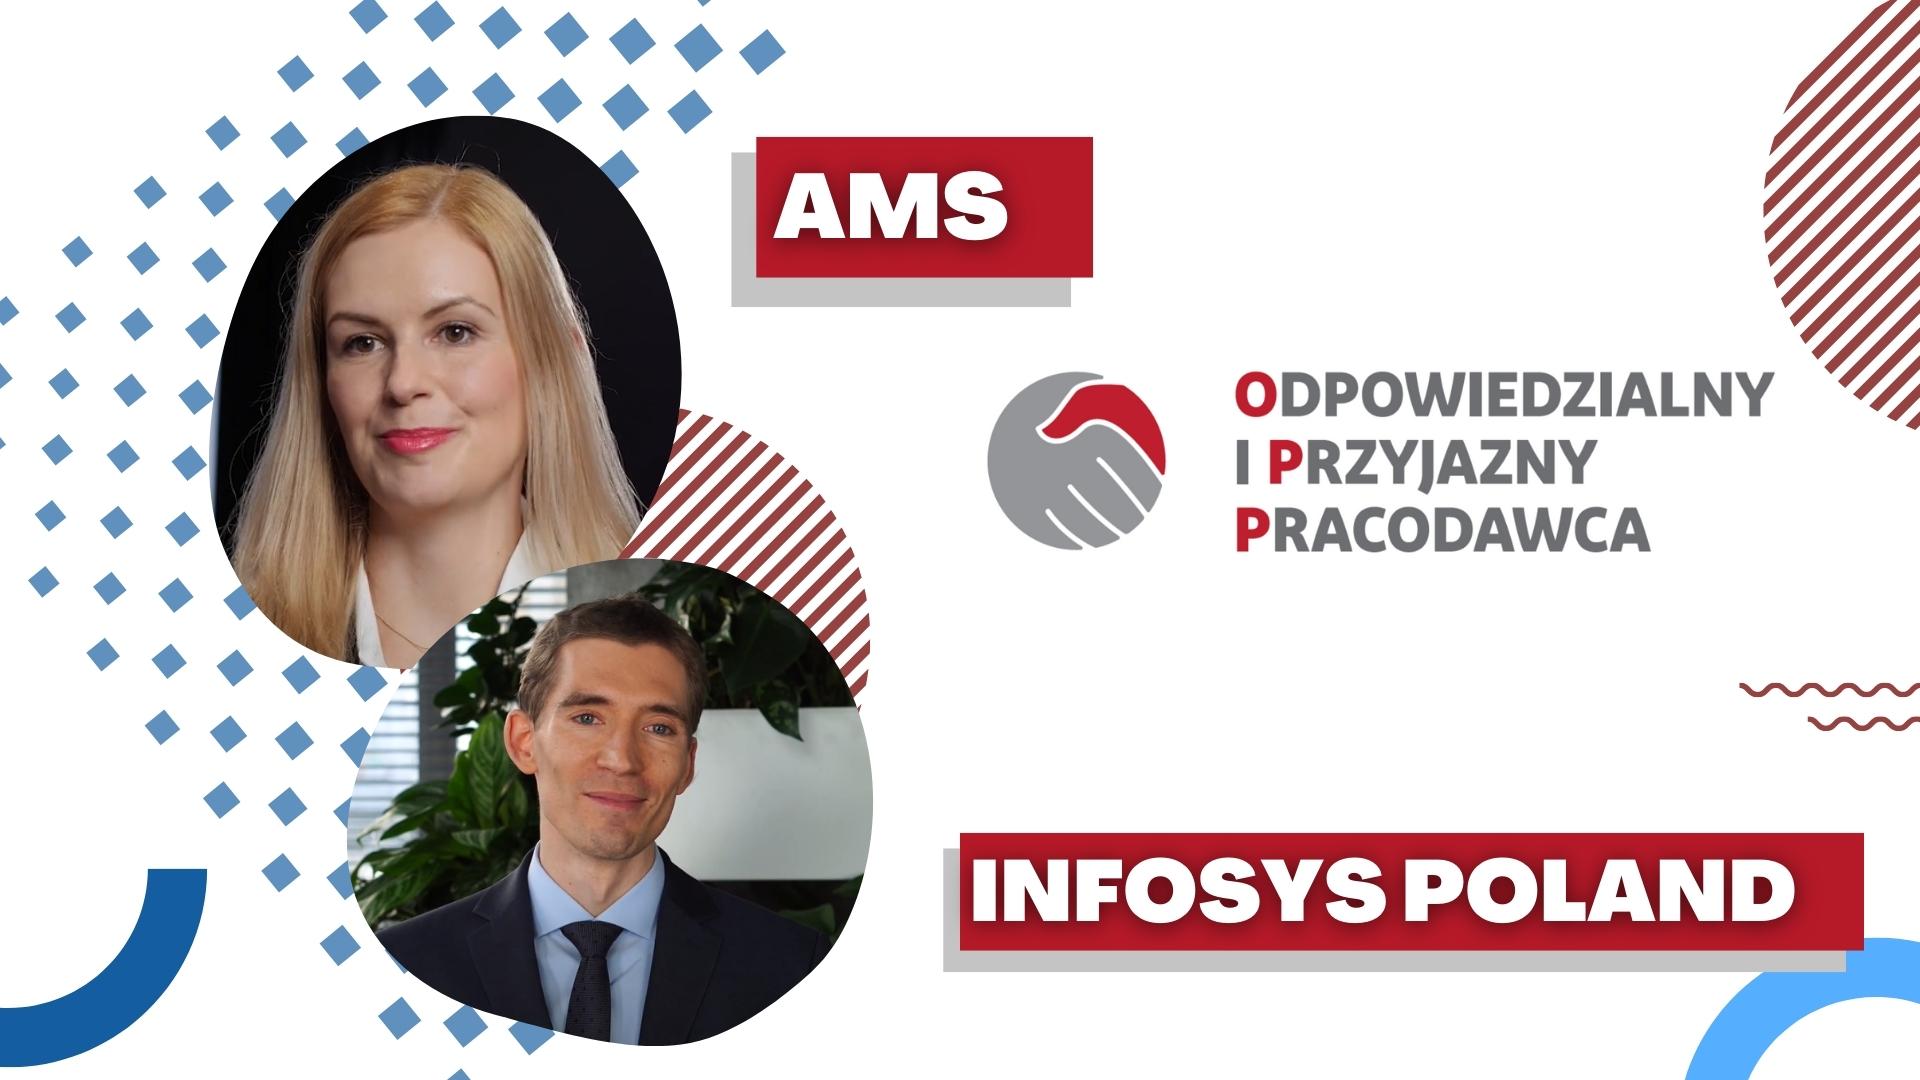 INFOSYS POLAND i AMS o procesie informowania pracowników o PPK